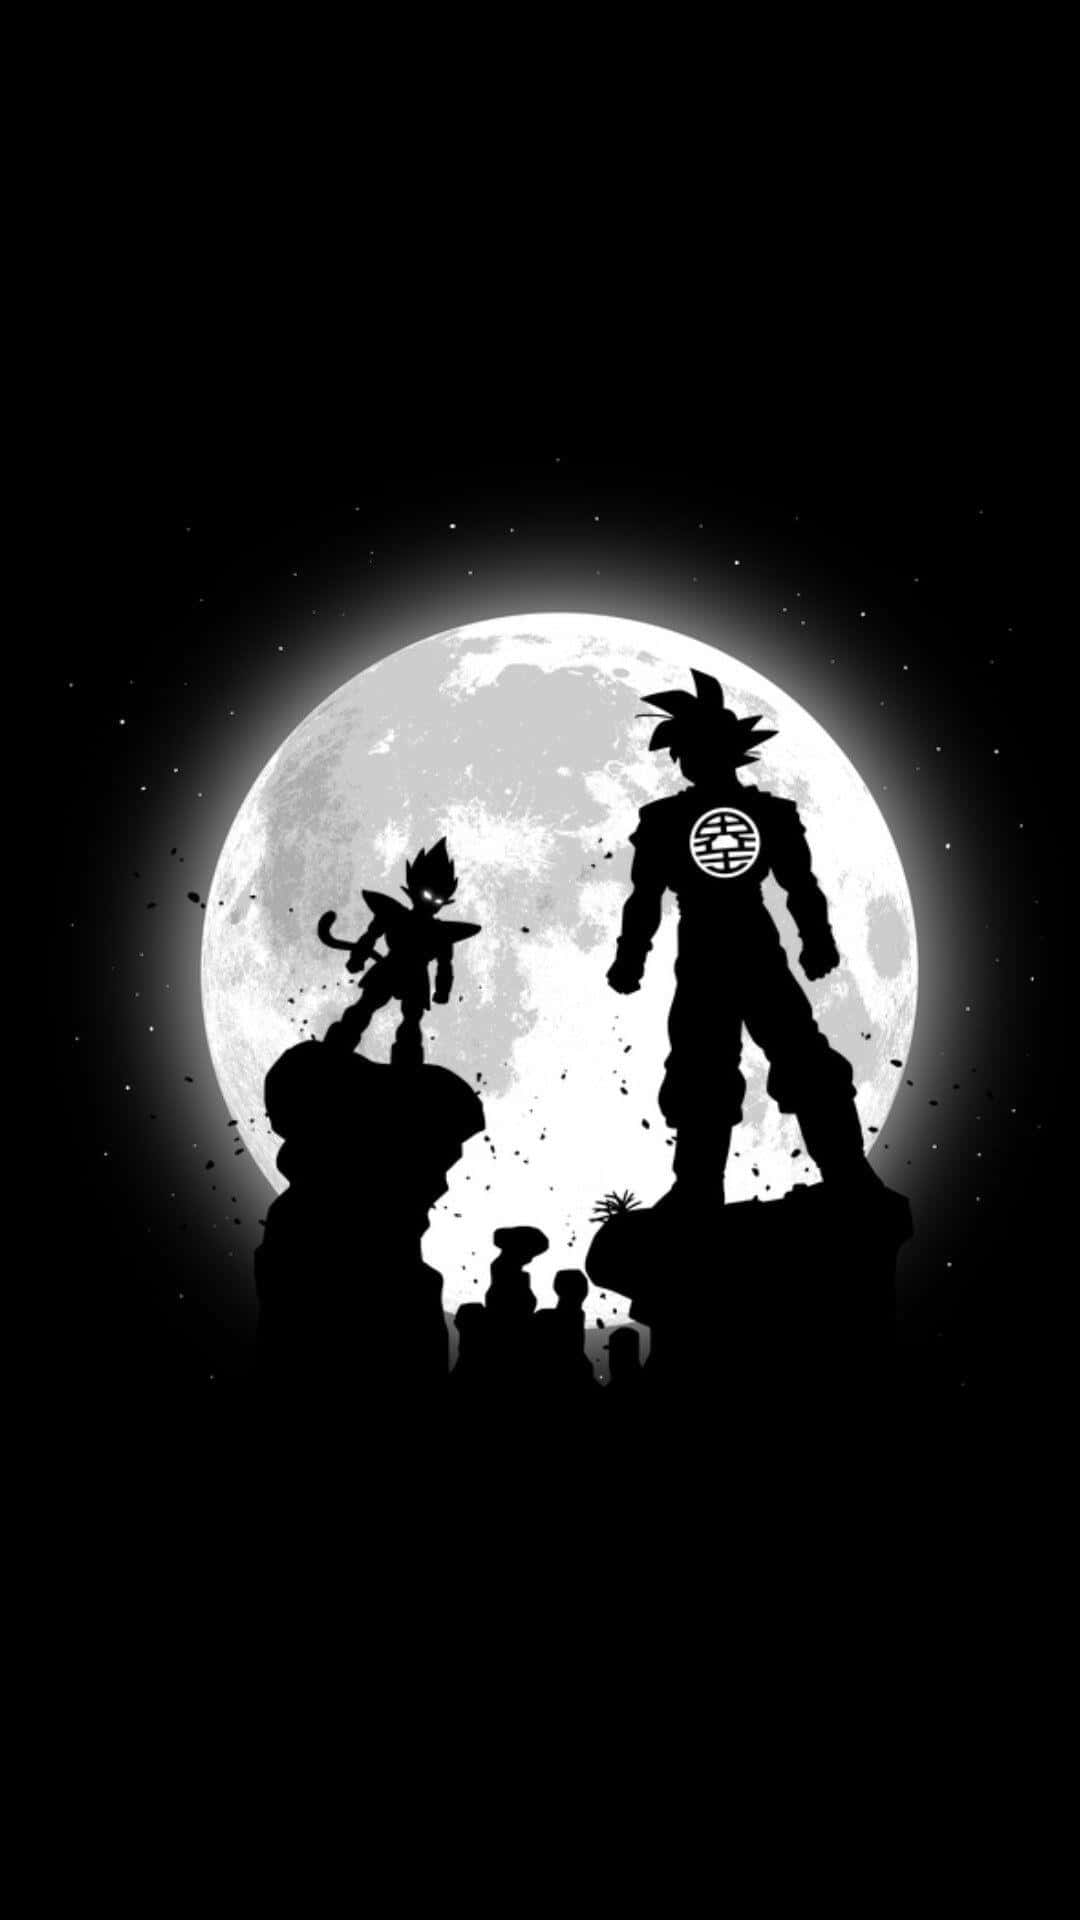 Vereintund Erobert – Goku Und Vegeta Im Kampf Wallpaper